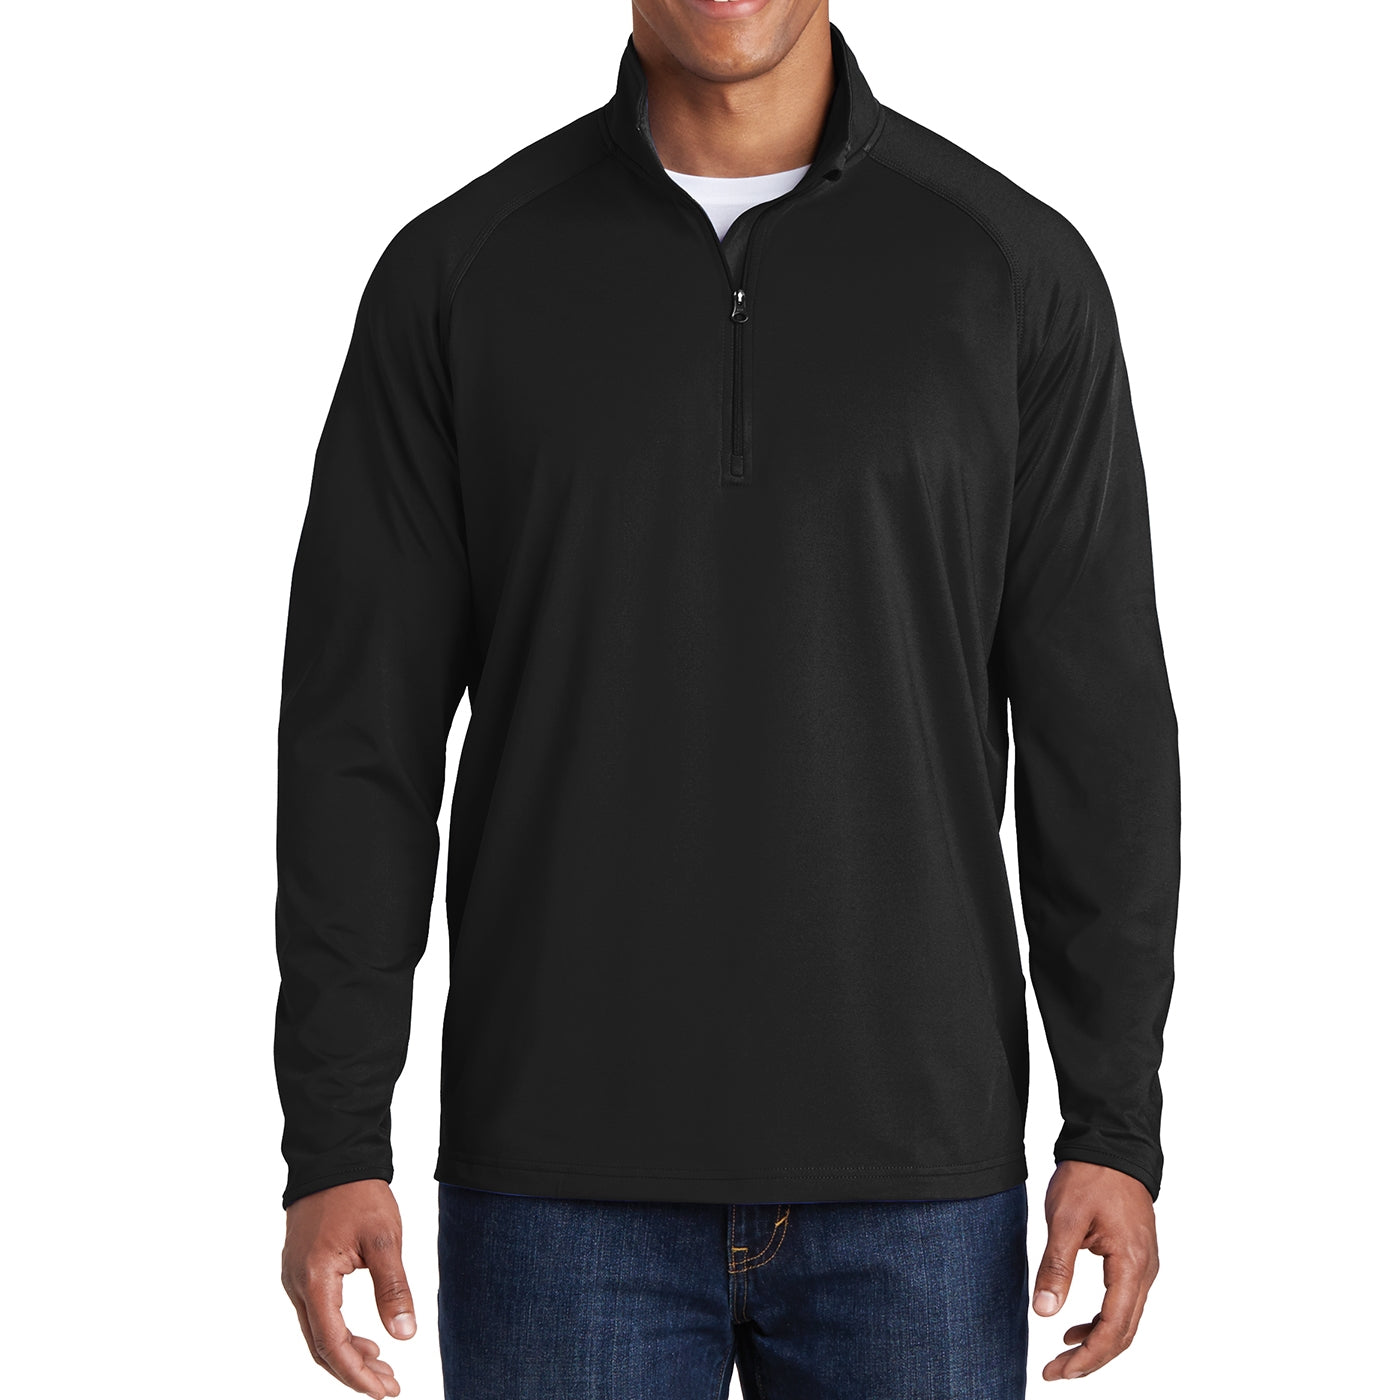 Men's Stretch 1/2 Zip Pullover - Black